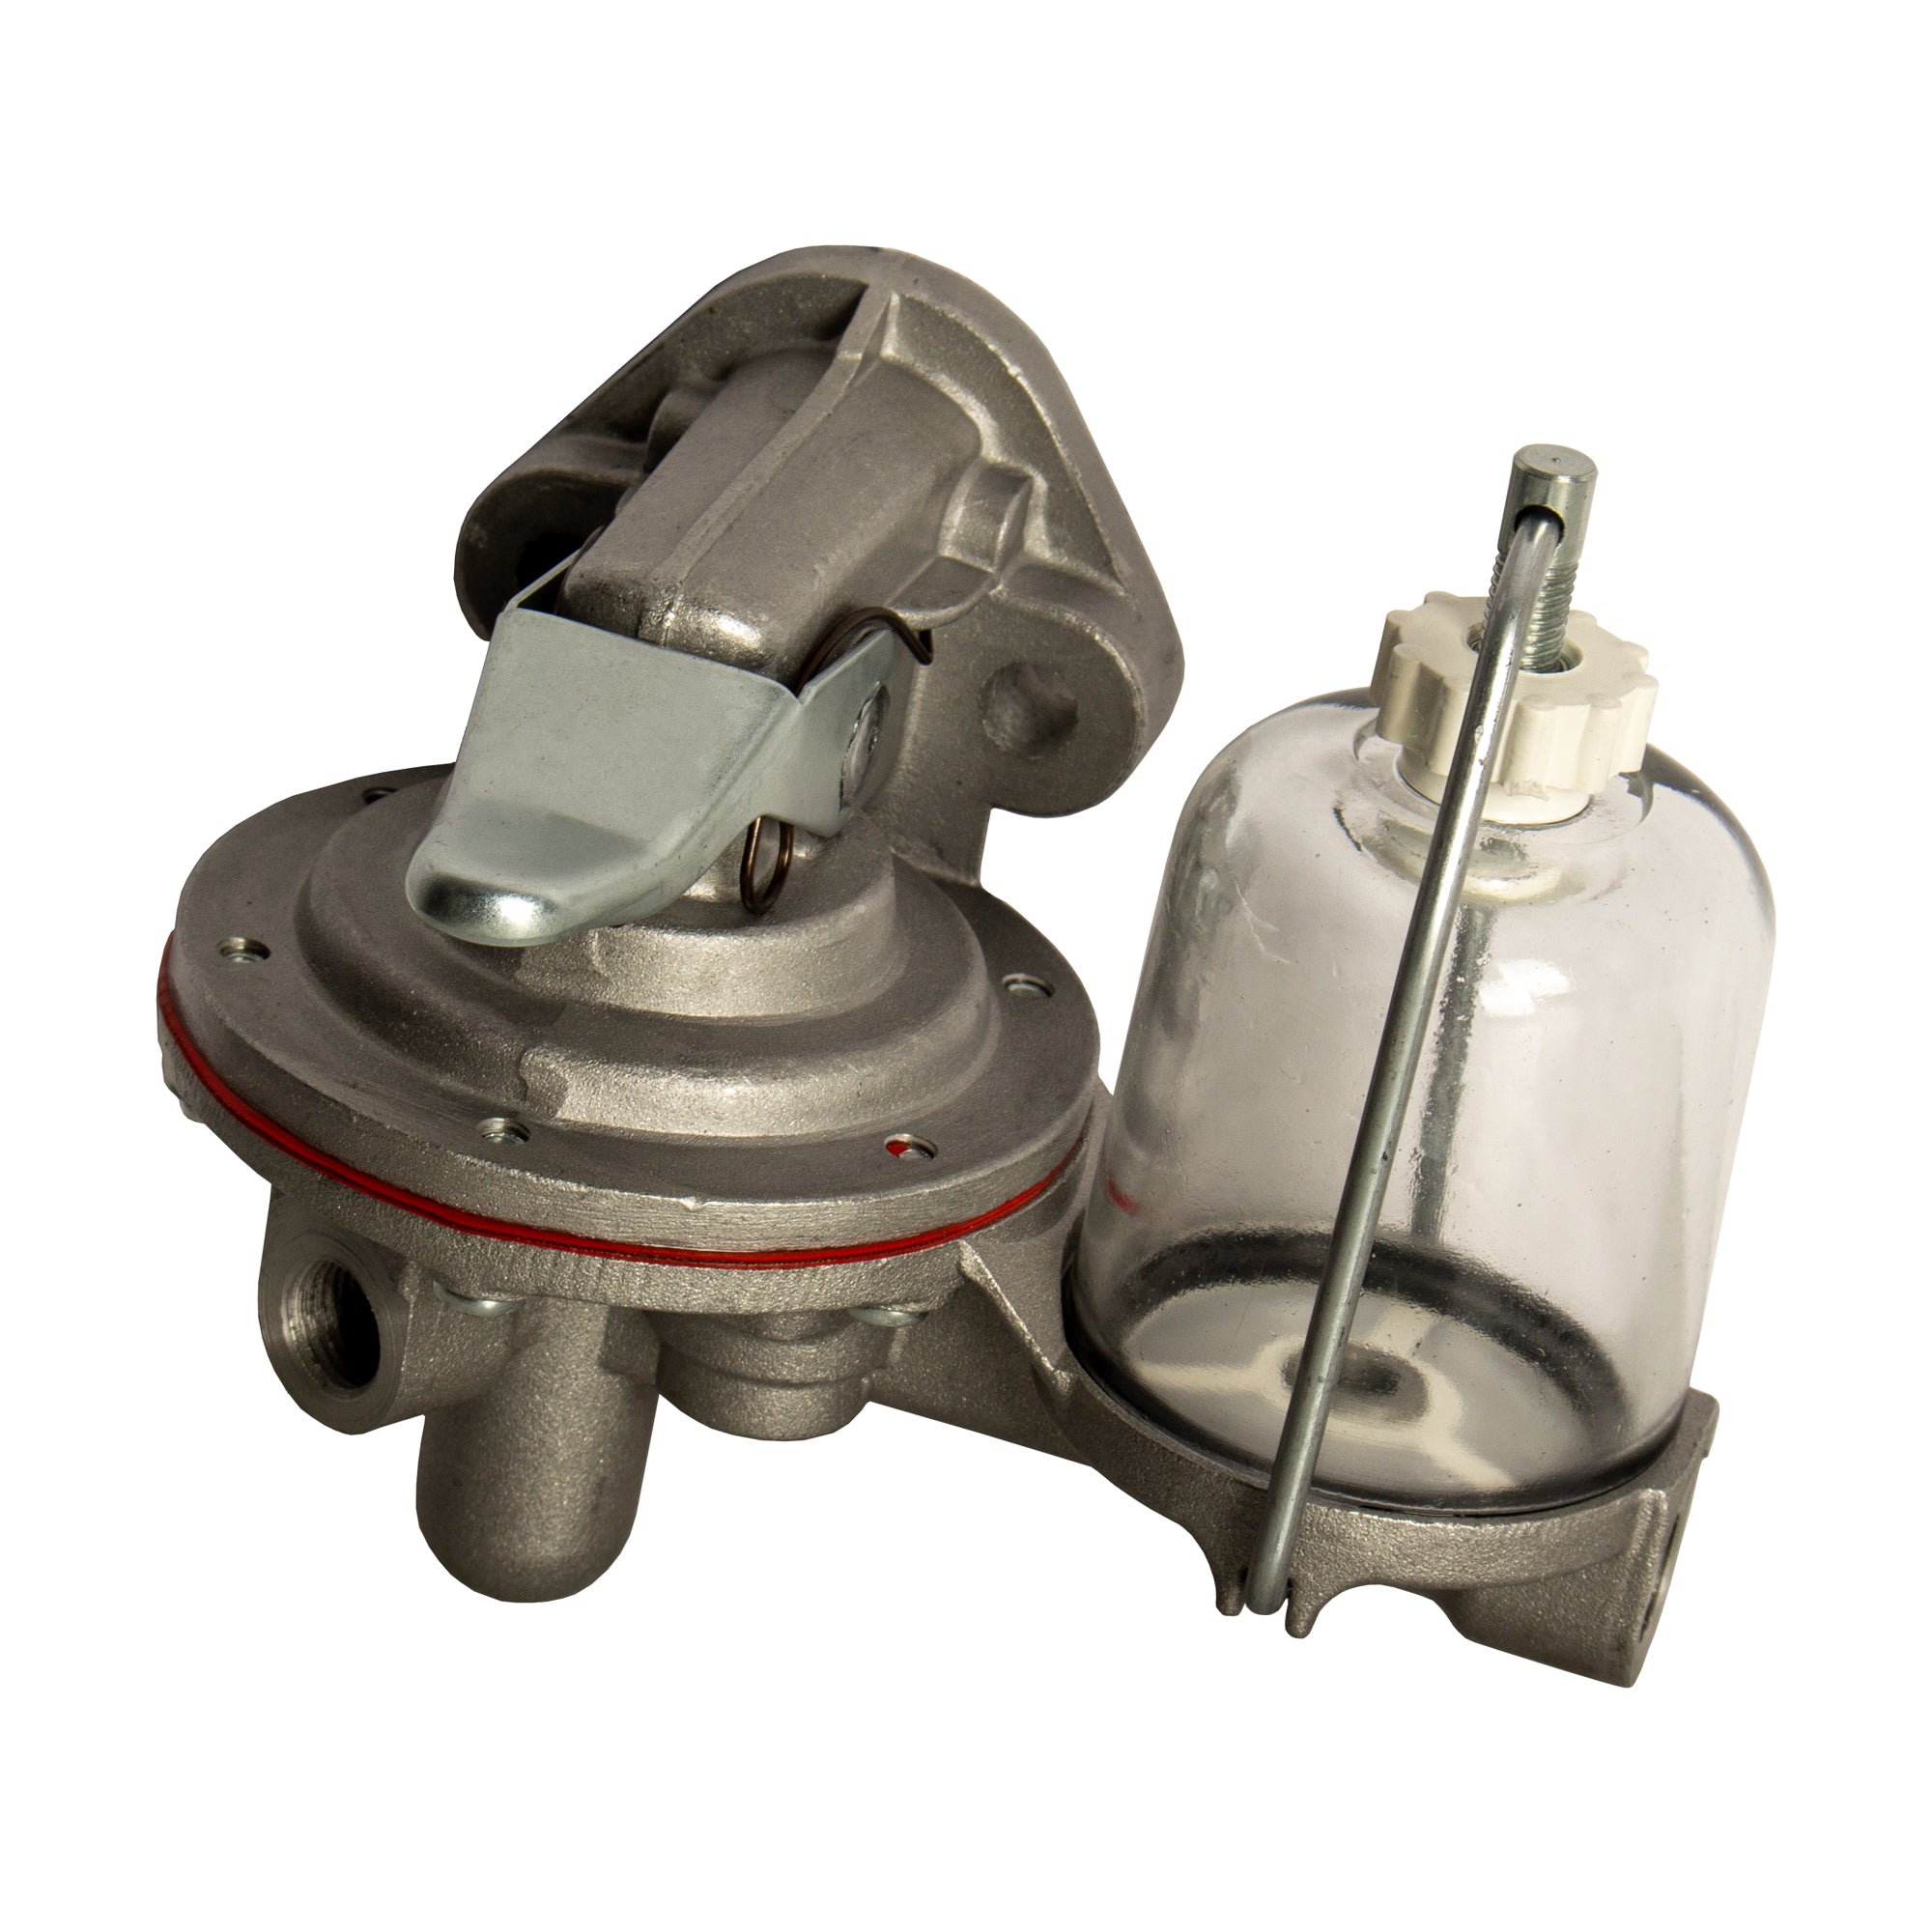 Fuel Pump Replacement for CASE-IH 1190 DAVID BROWN 780 880 K908819 B908819